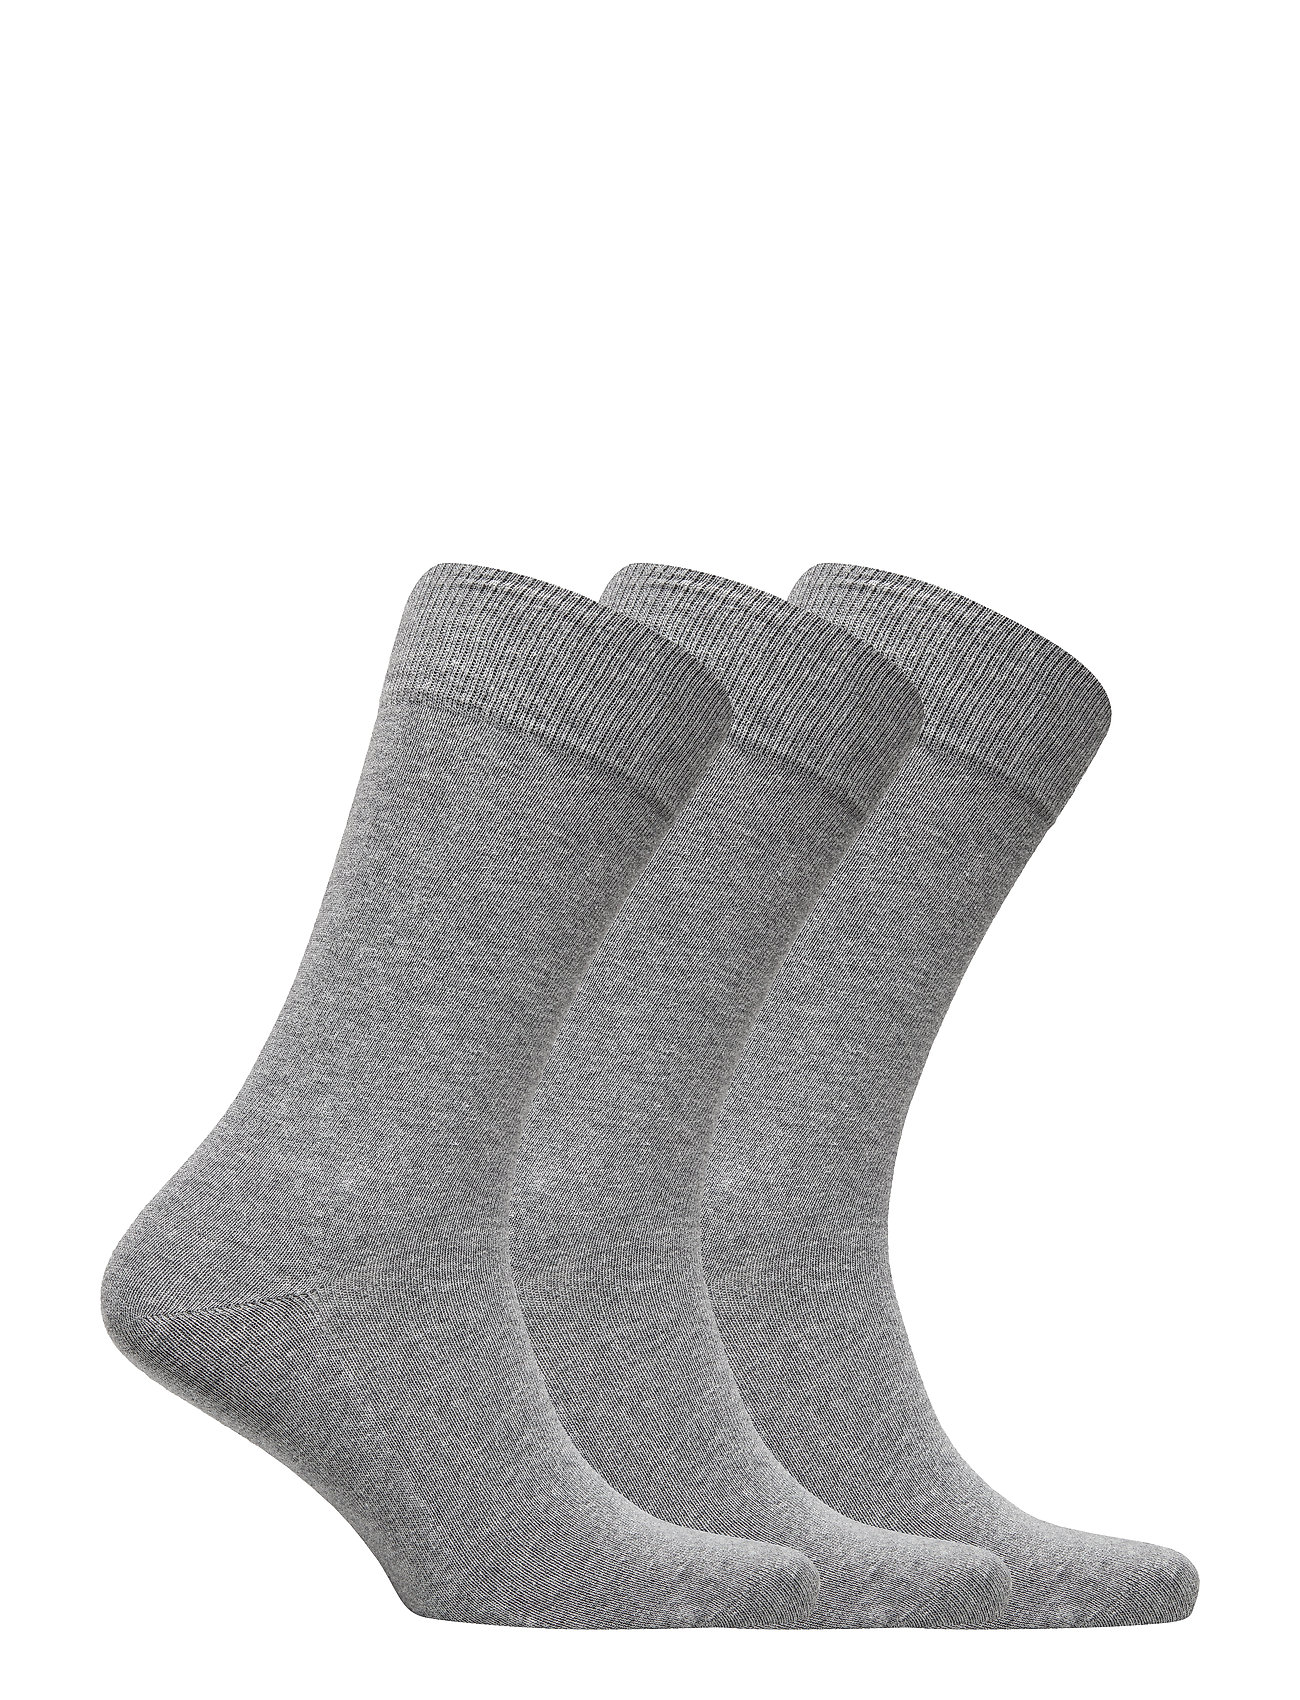 Amanda Christensen - True Ankle Sock - skarpetki w wielopaku - grey melange - 1